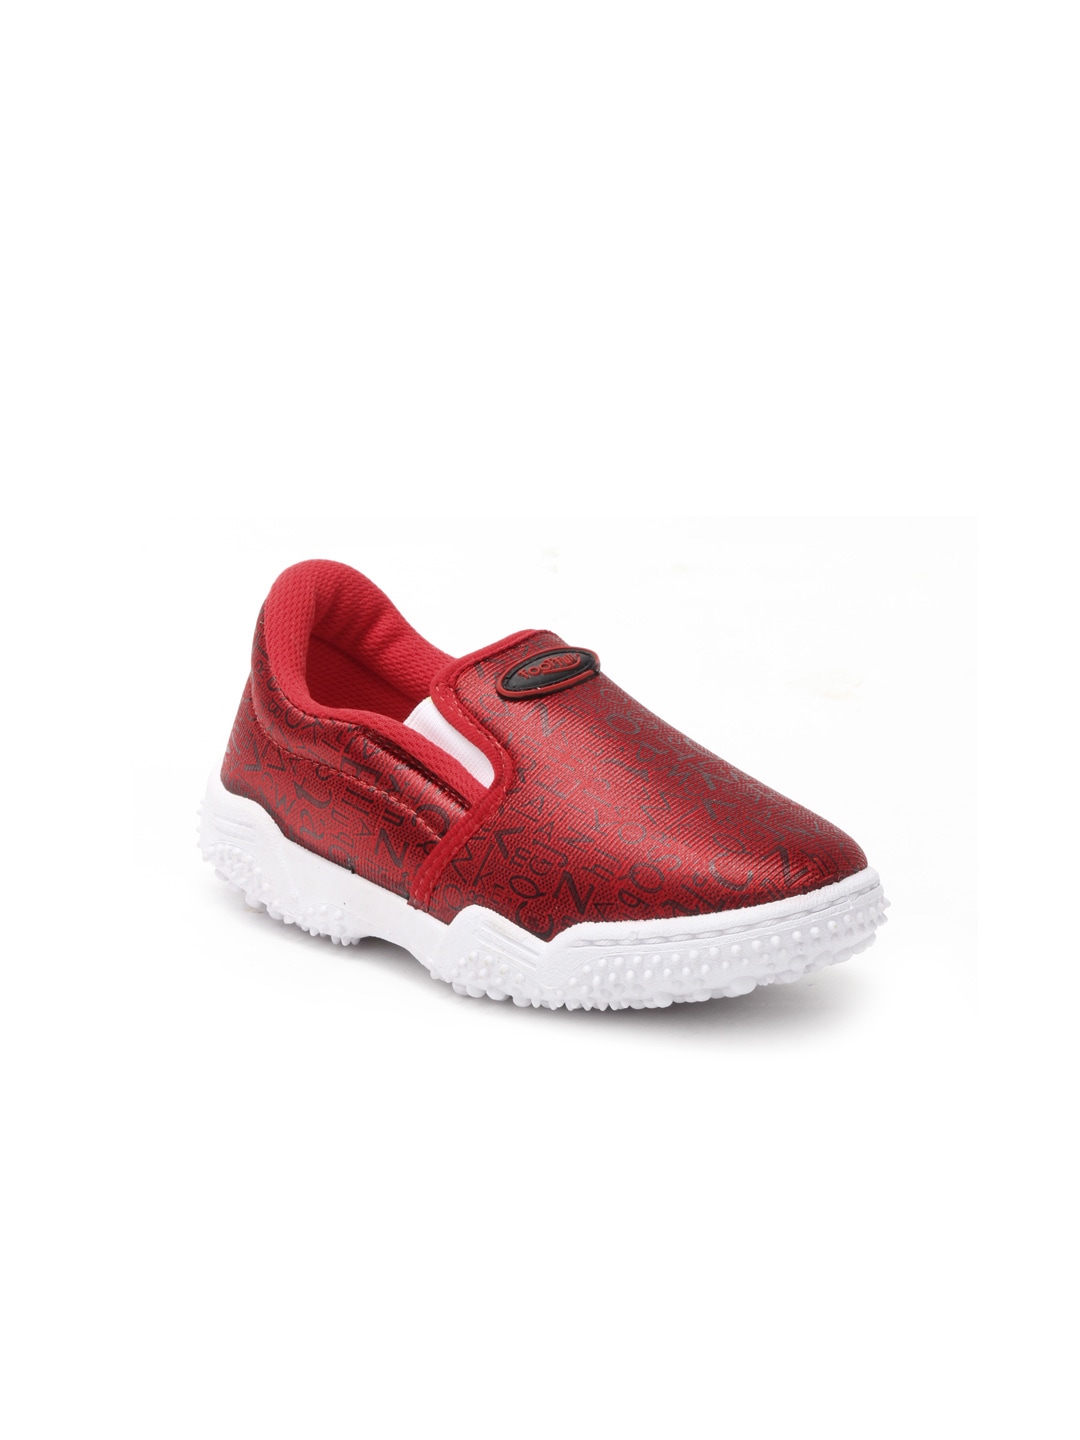 Footfun Kids Unisex Red Shoes